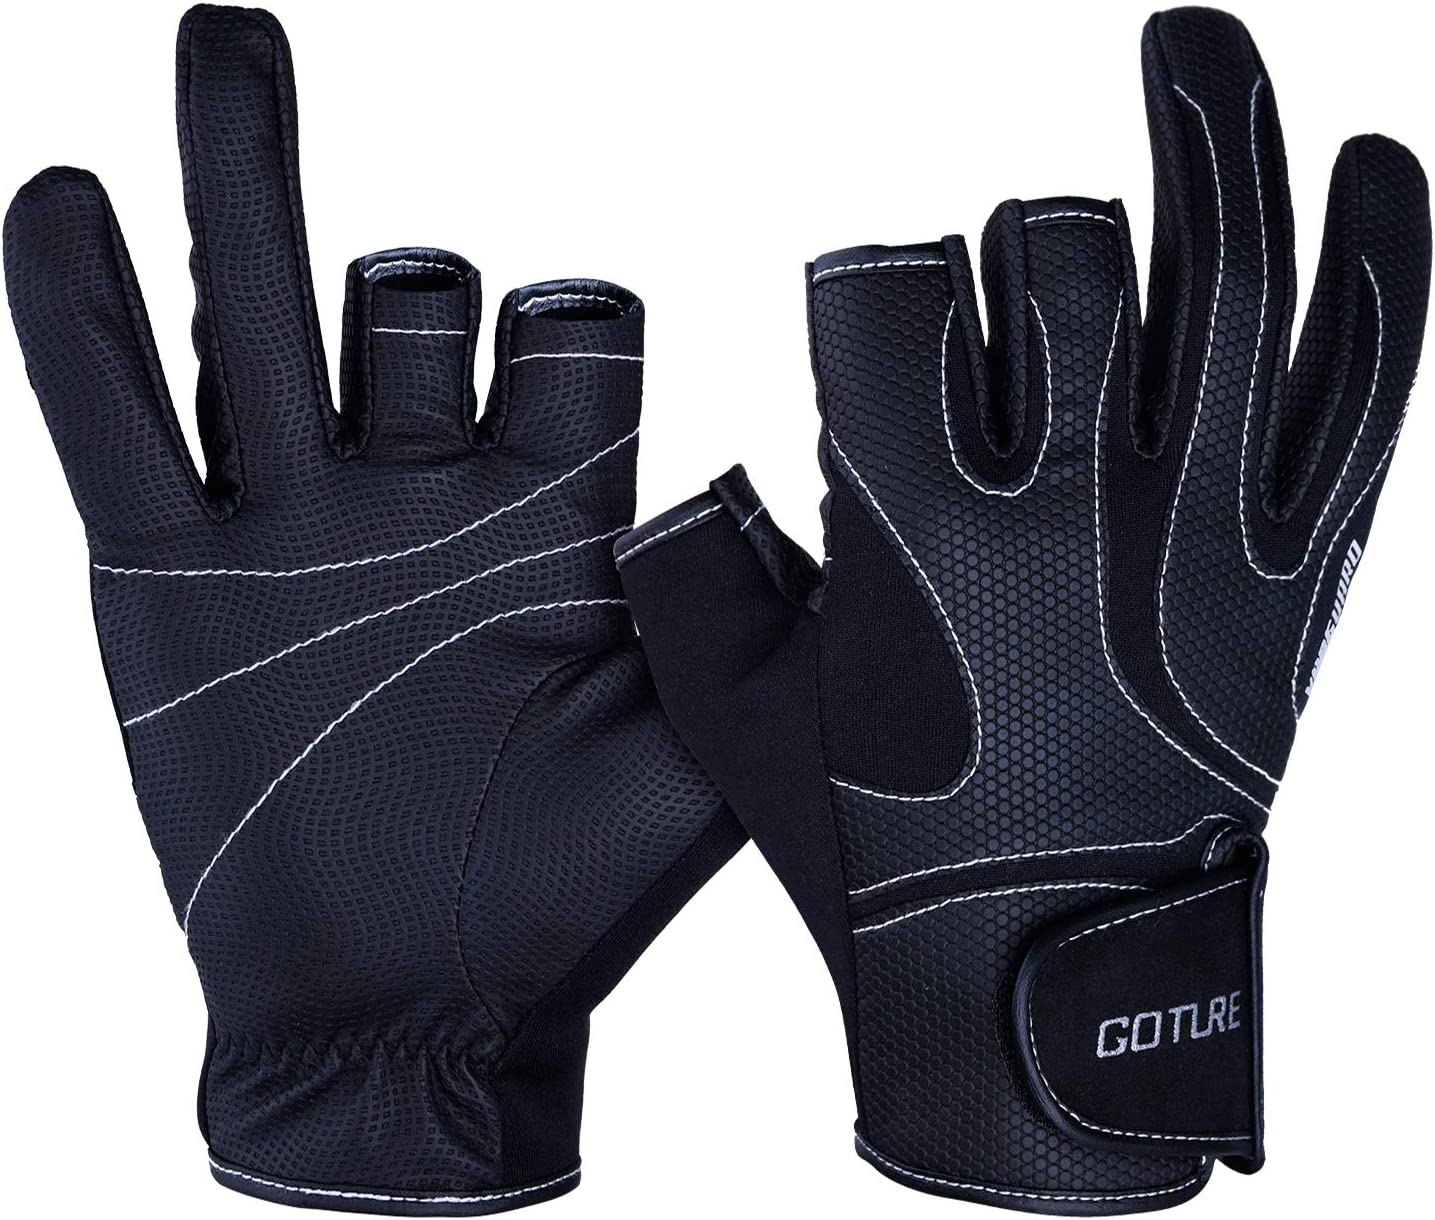 Goture Anti-Slip Water Resistant Ice Fishing Gloves for Men